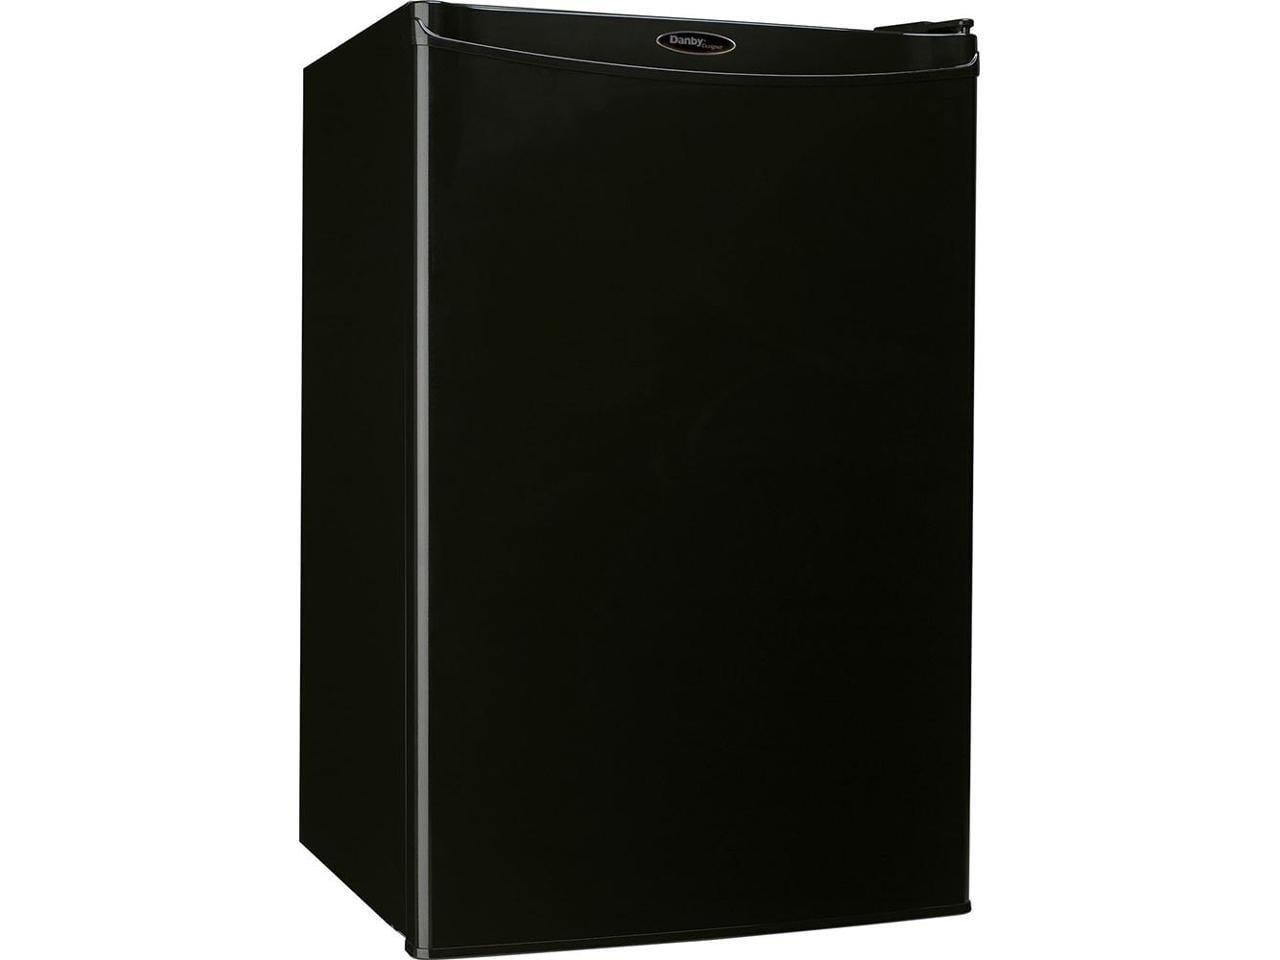  Danby Designer DAR044A4BDD-6 4.4 Cu.Ft. Mini Fridge, Compact  Refrigerator for Bedroom, Living Room, Bar, Dorm, Kitchen, Office, E-Star  in Black : Danby: Home & Kitchen